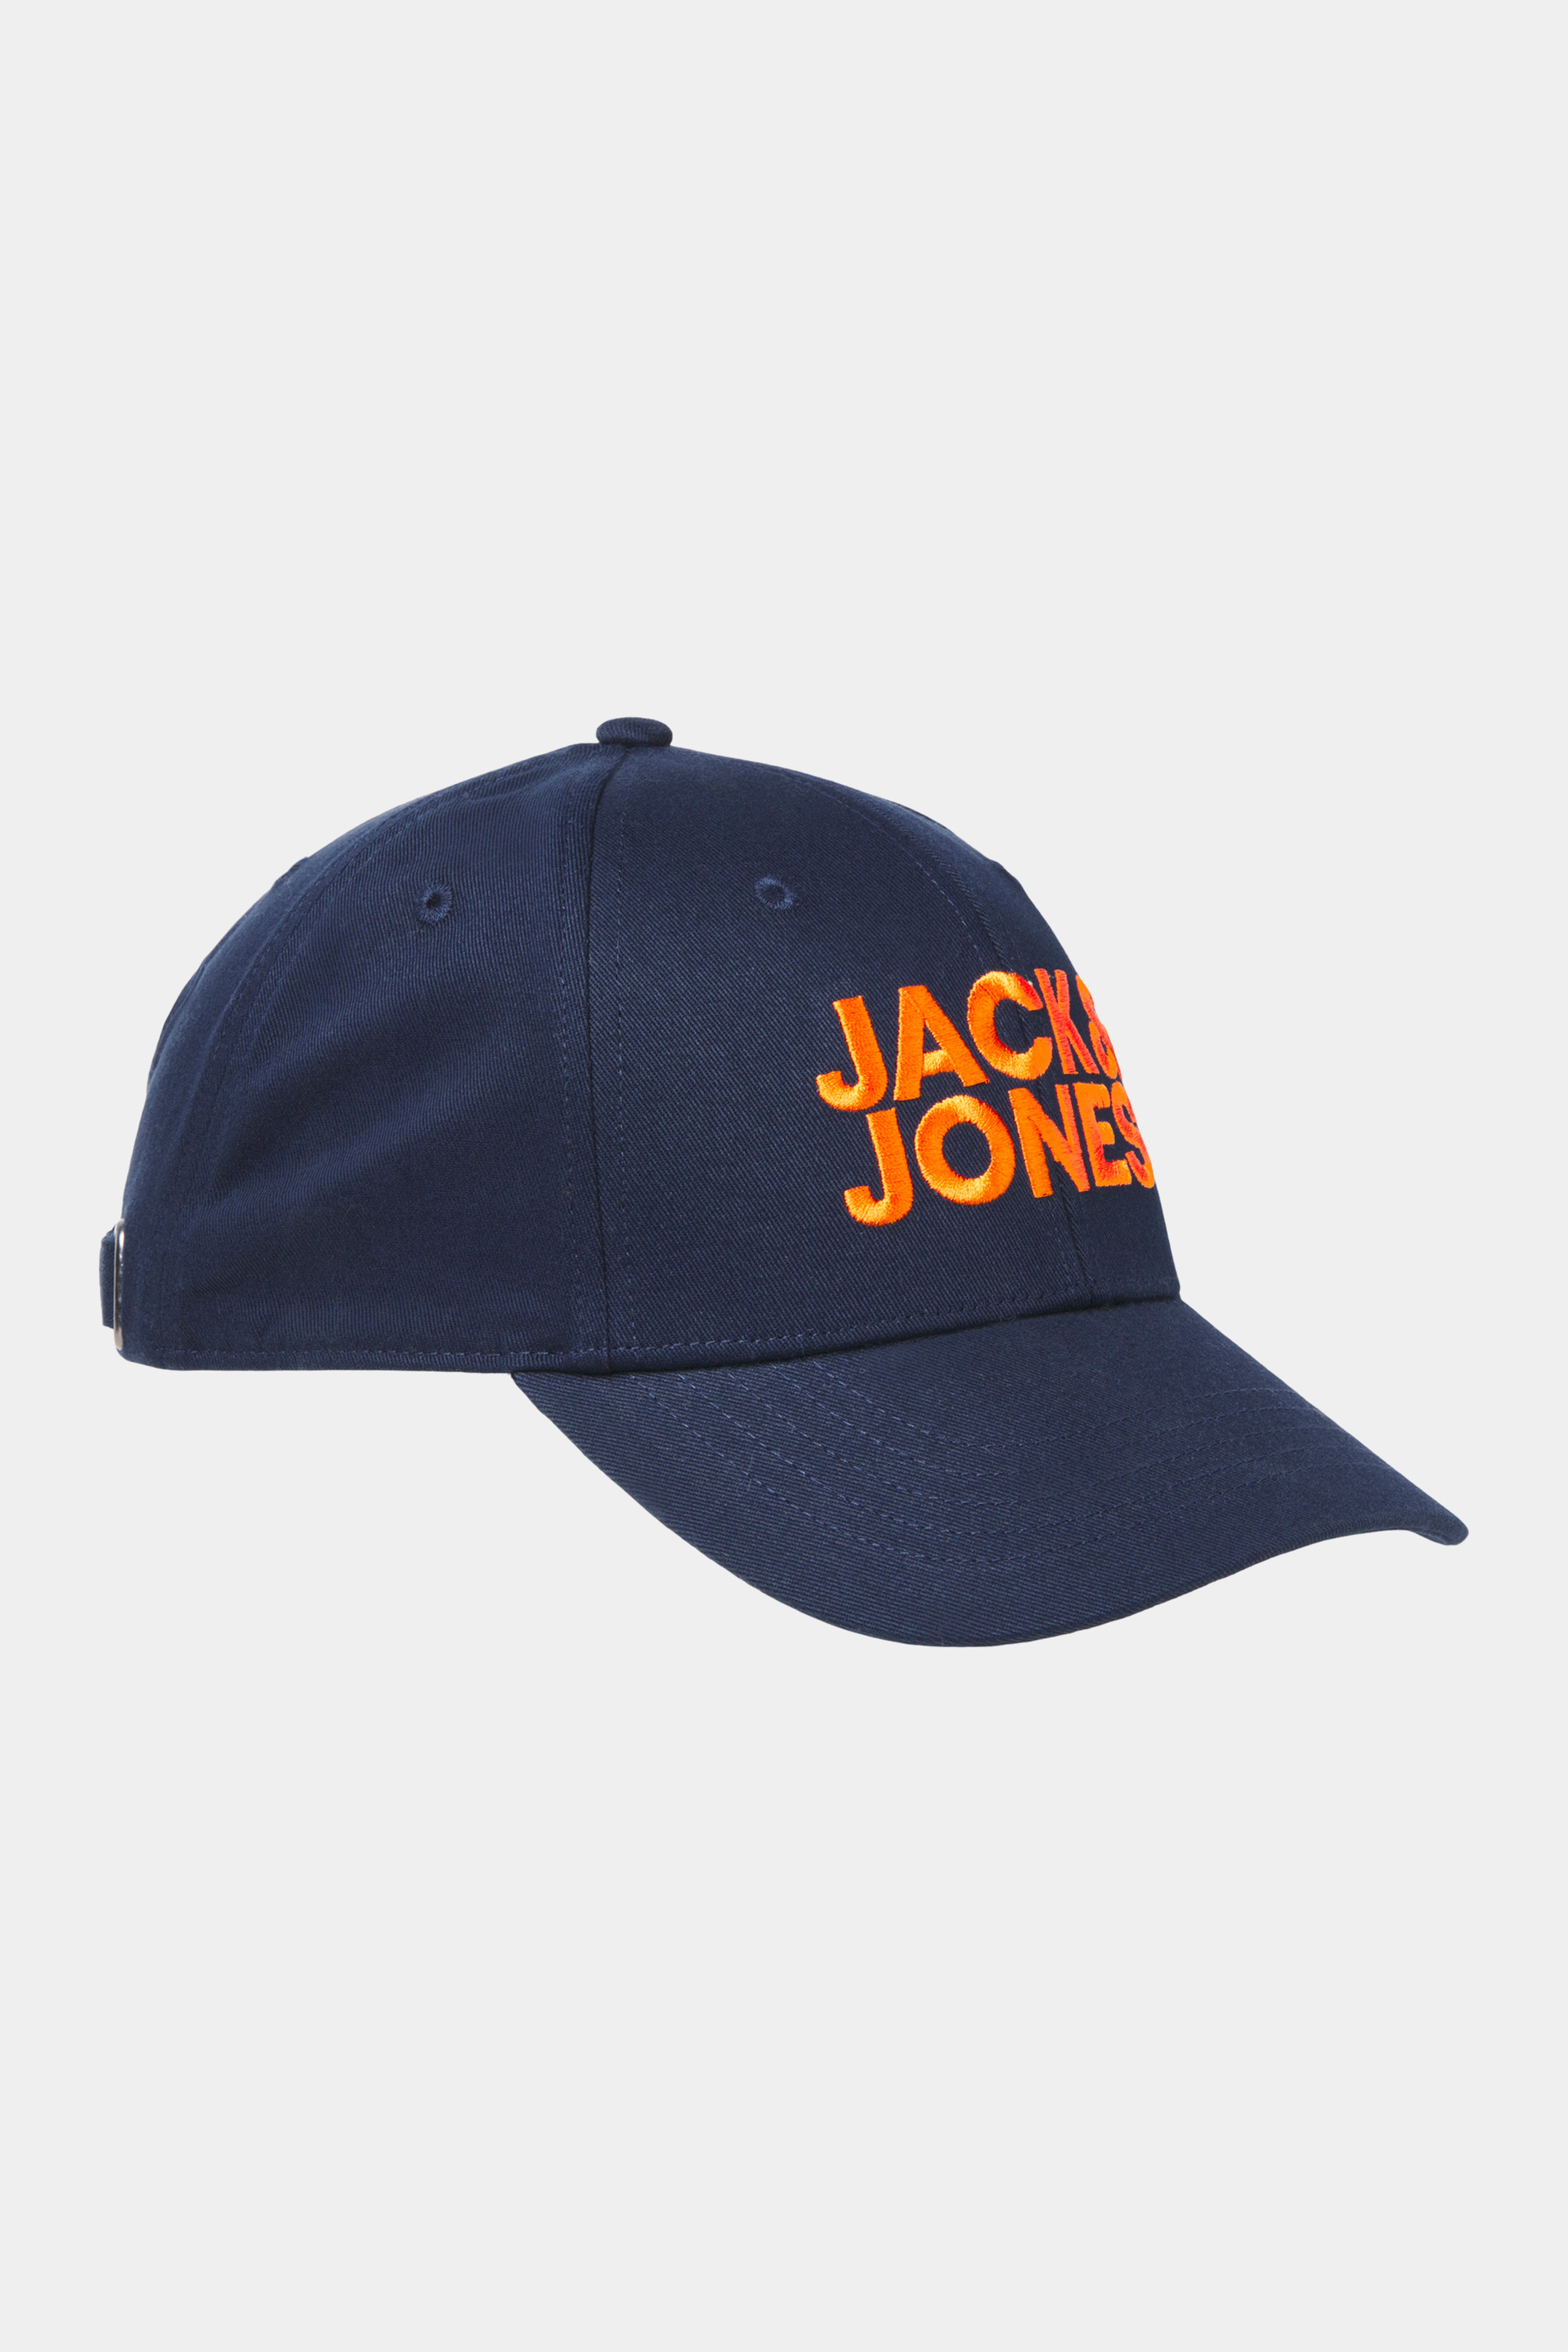 JACK & JONES Blue & Orange Baseball Cap | BadRhino 3